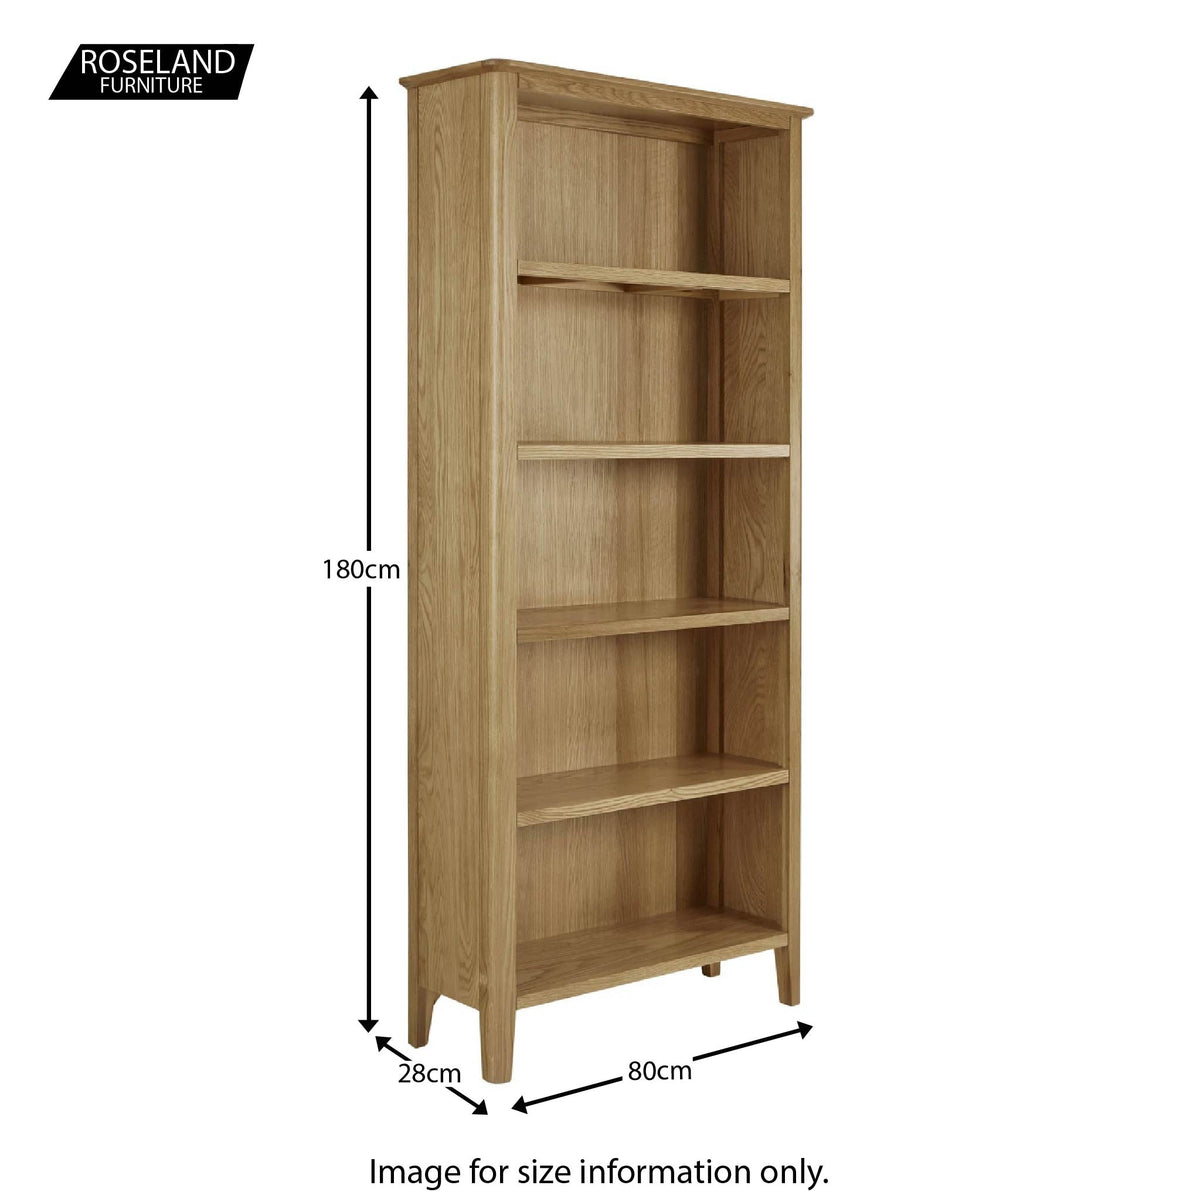 Alba Oak Large Bookcase - Size guide